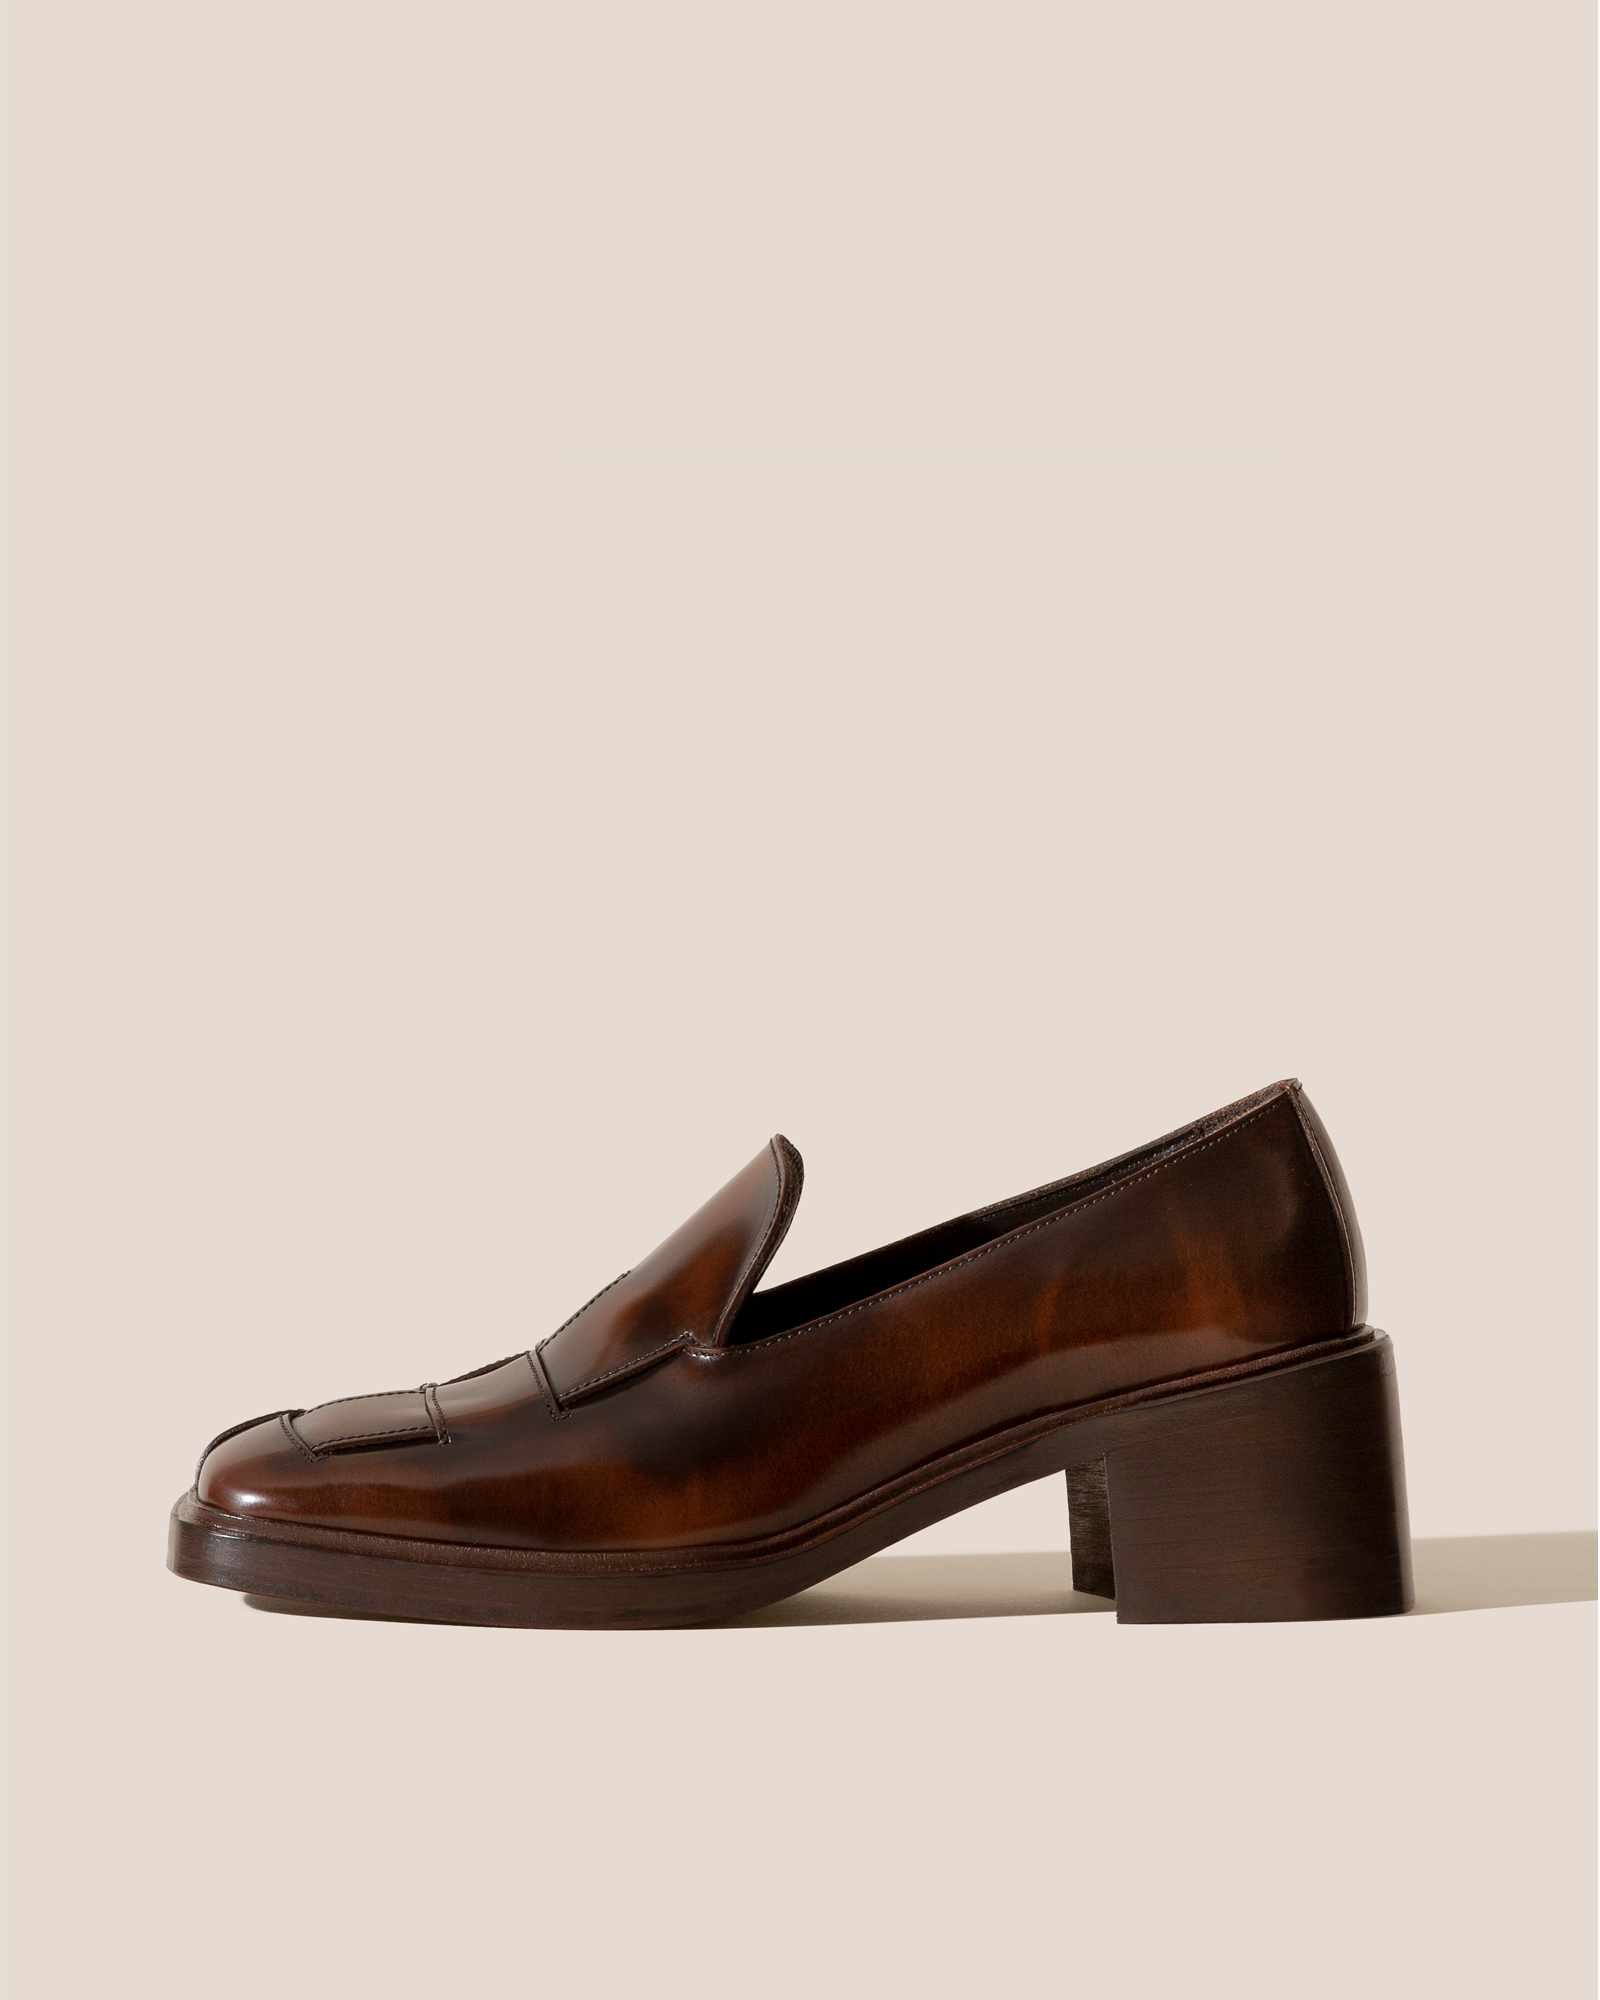 CHIKO Taini Square Toe Block Heels Loafers Shoes | Block heel loafers, Heeled  loafers, Loafers